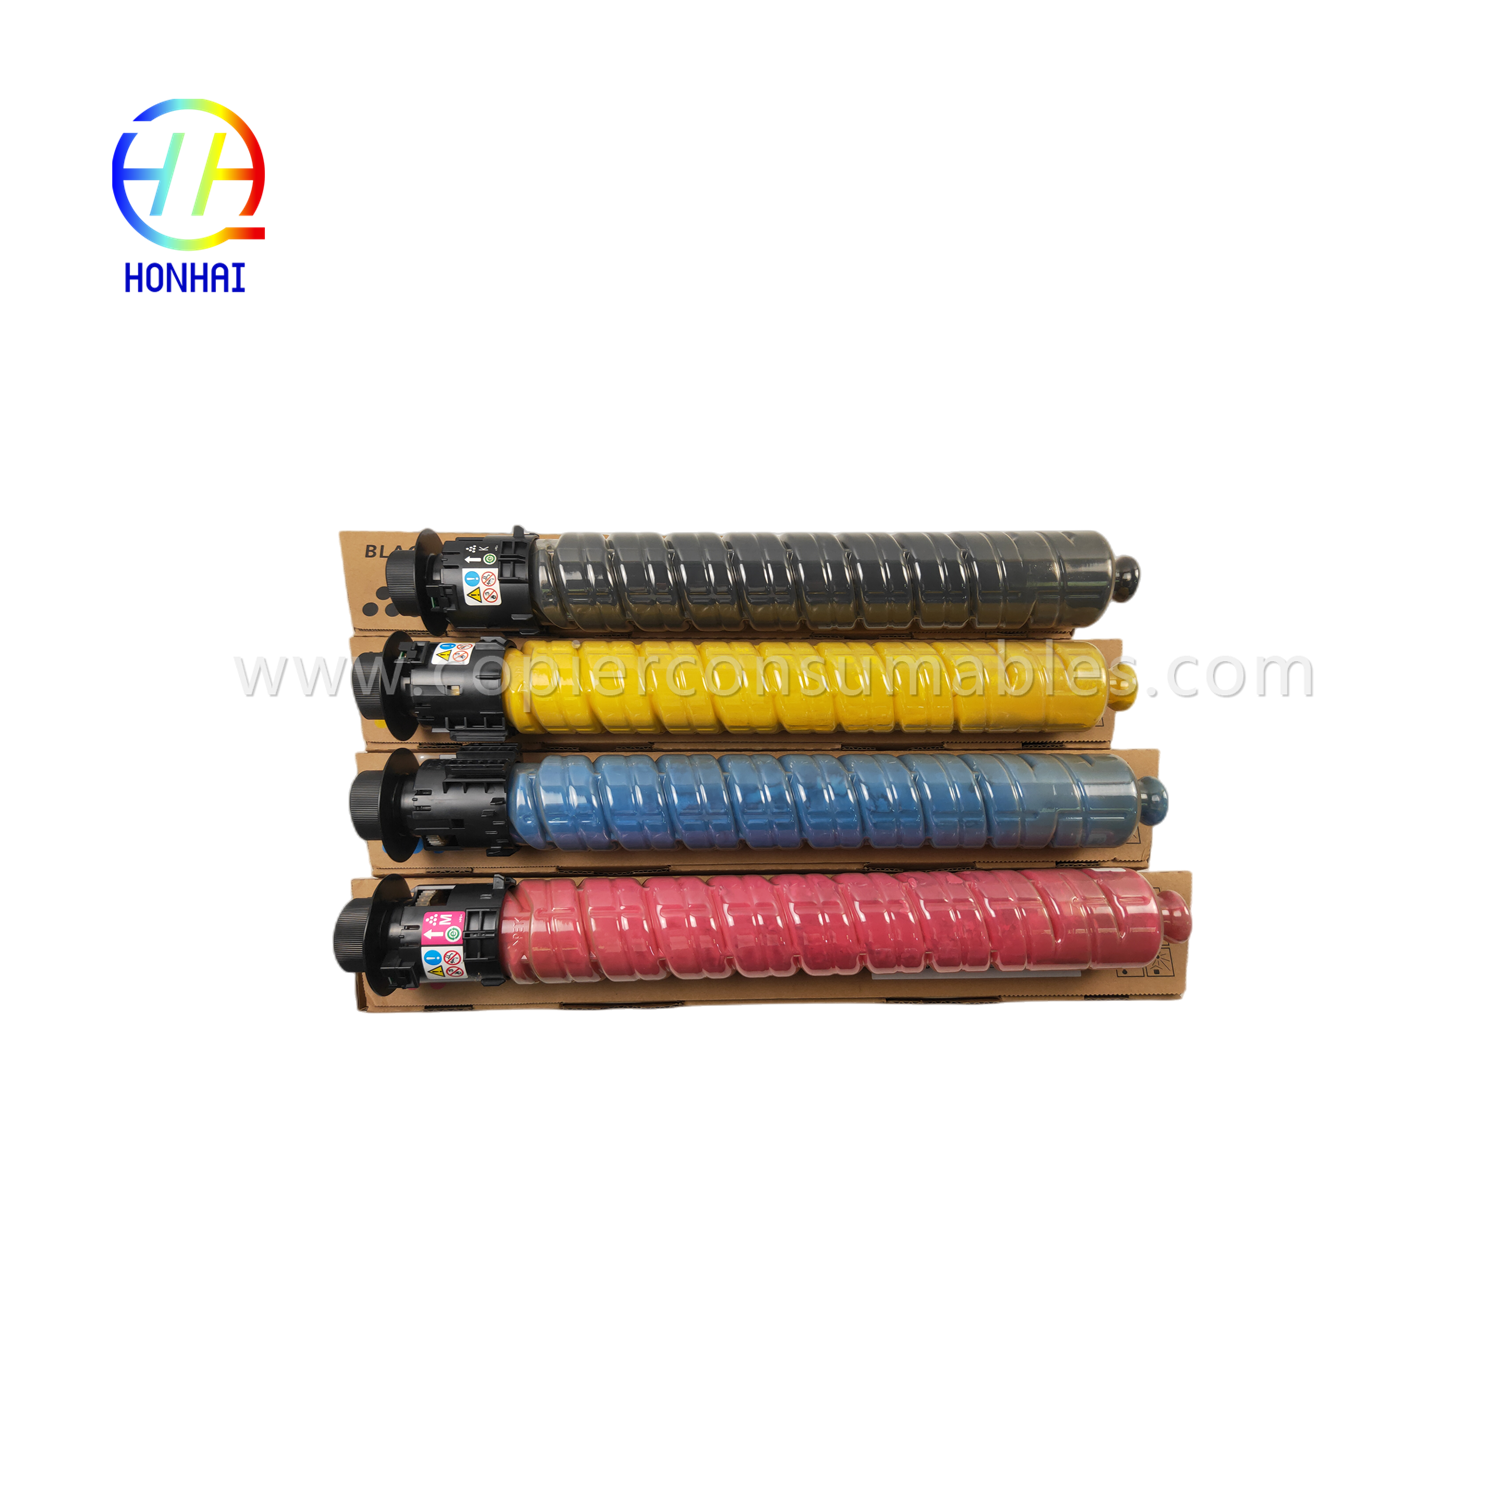 Toner Cartridge Set for Ricoh MPC3003 MPC3004 MPC3503 MPC3504 841813 841814 841815 841816 (2)